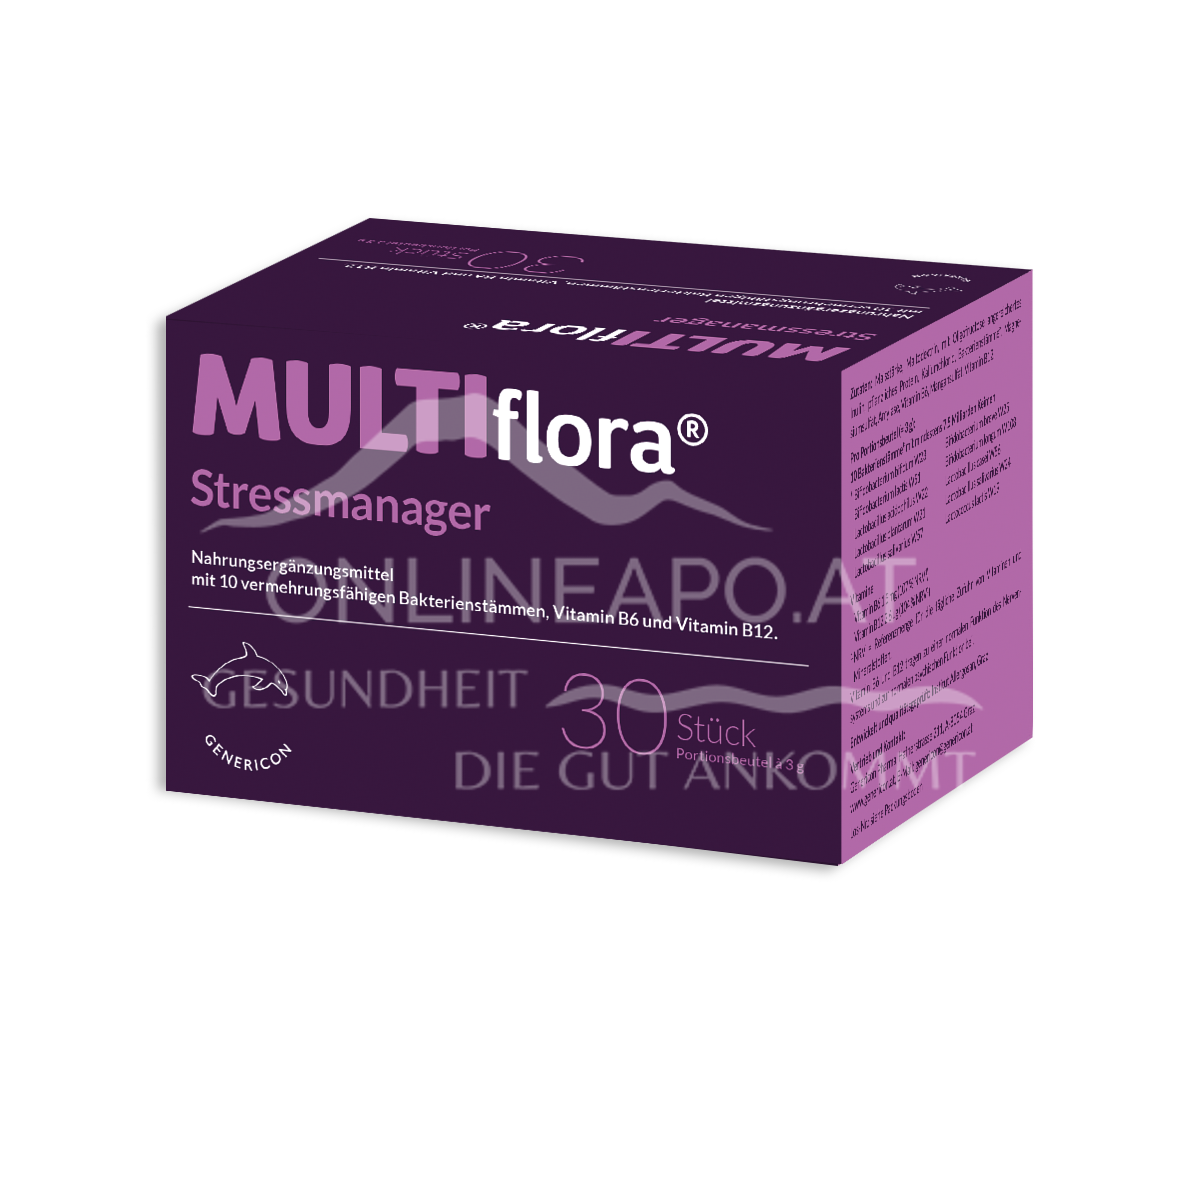 MULTIflora® Stressmanager Sachets